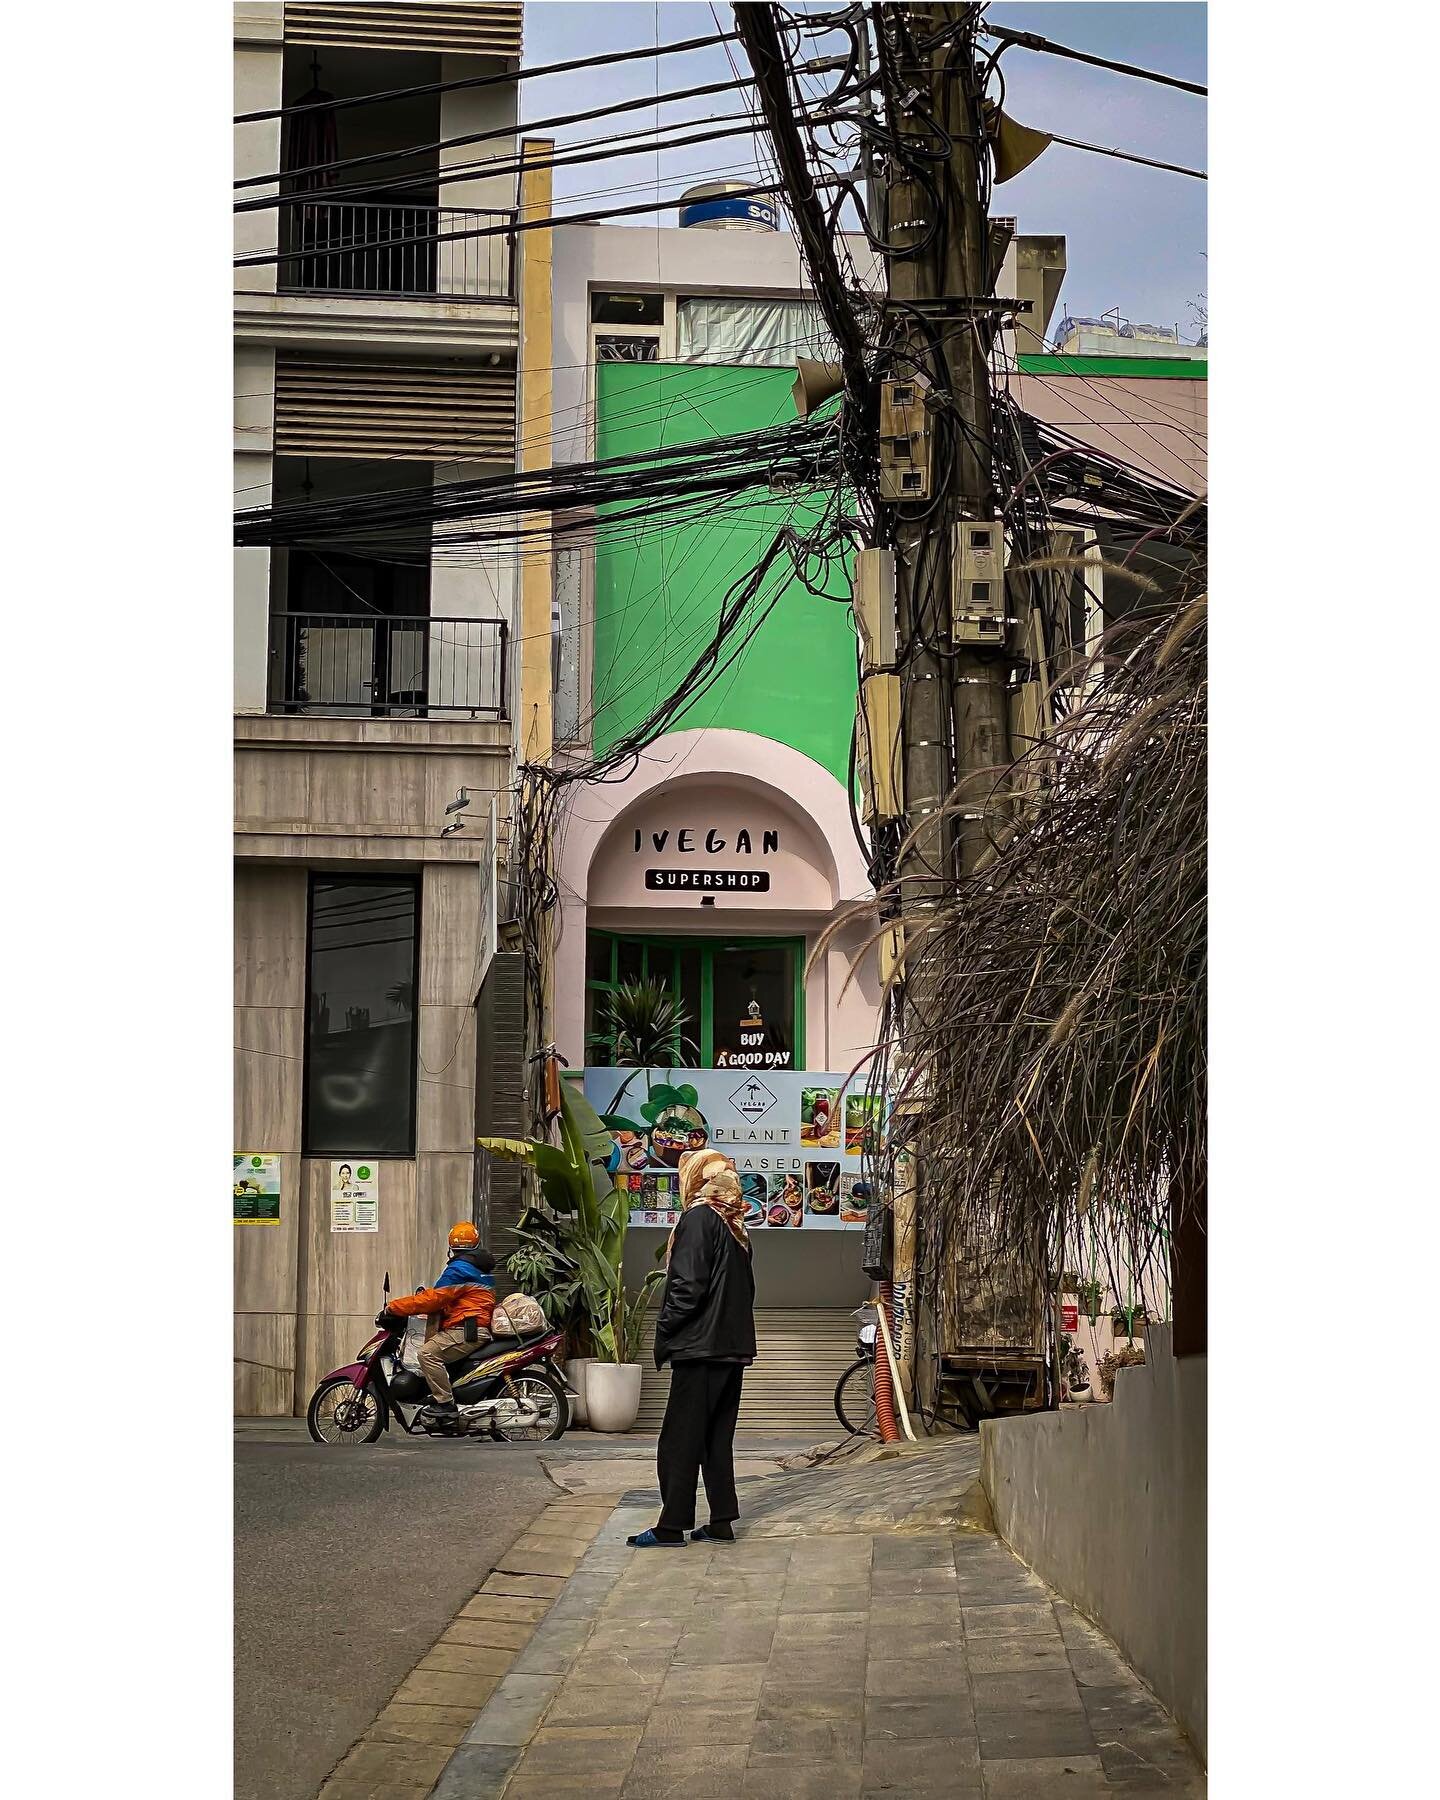 #hanoivietnam #hanoi #vietnam #visitvistnam #christmasvietnam #portraitphotography  #33trekking #natgeo #natgeotravel #photography #worldtravel #shotoniphone #travelphotography #travelandleisureasia #livelaughlove #adobe #lightroom #photoblog #yoga #